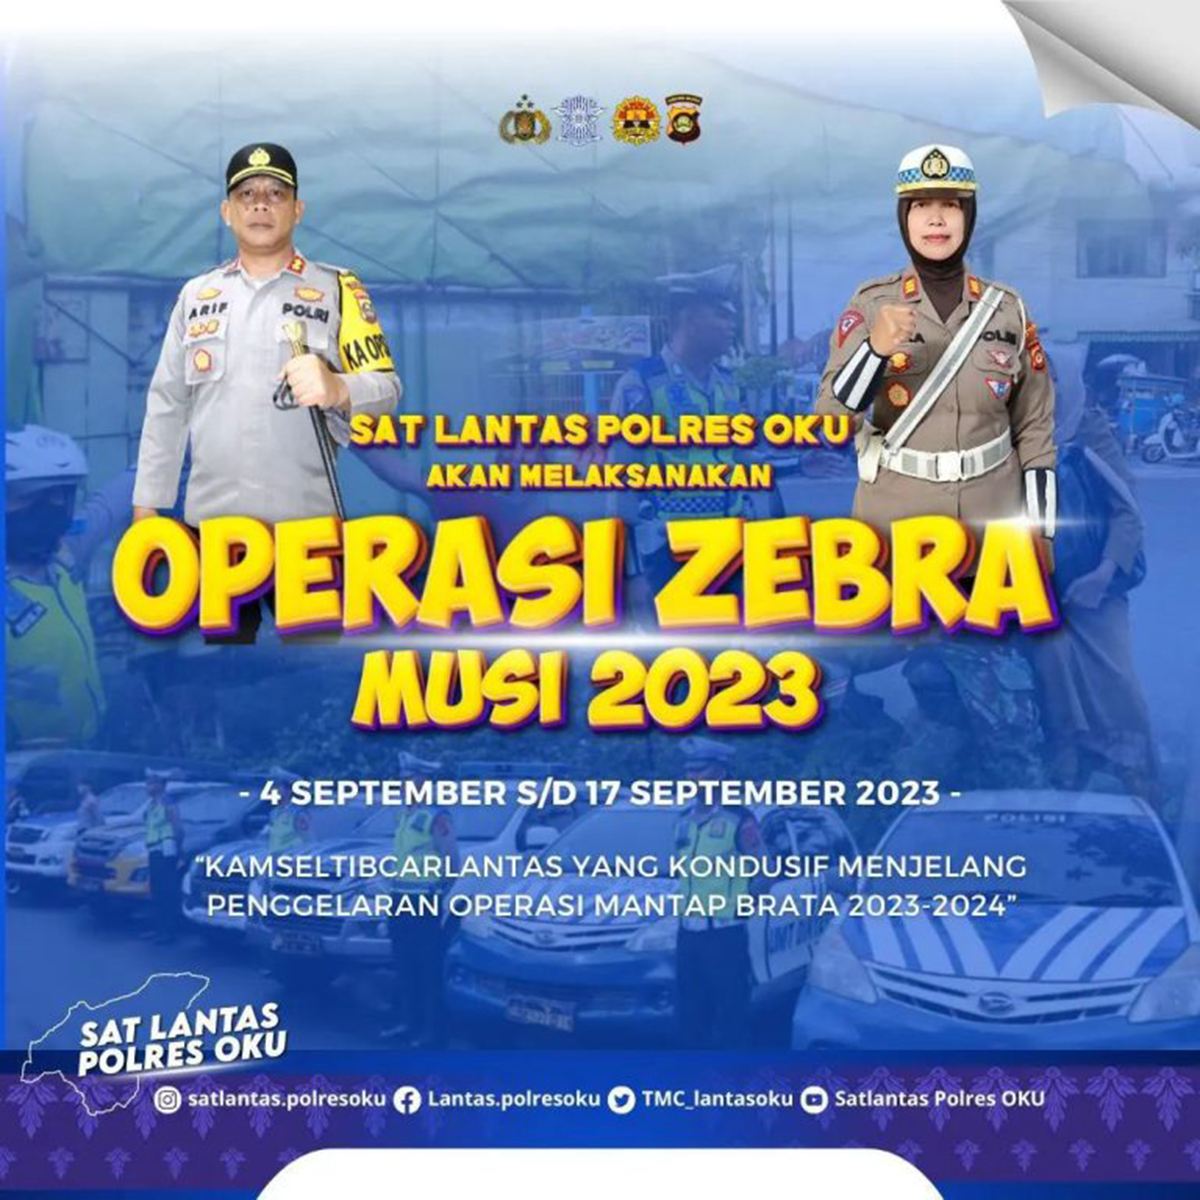 Polres OKU Gelar Operasi Zebra Musi 2023 Secara Serentak